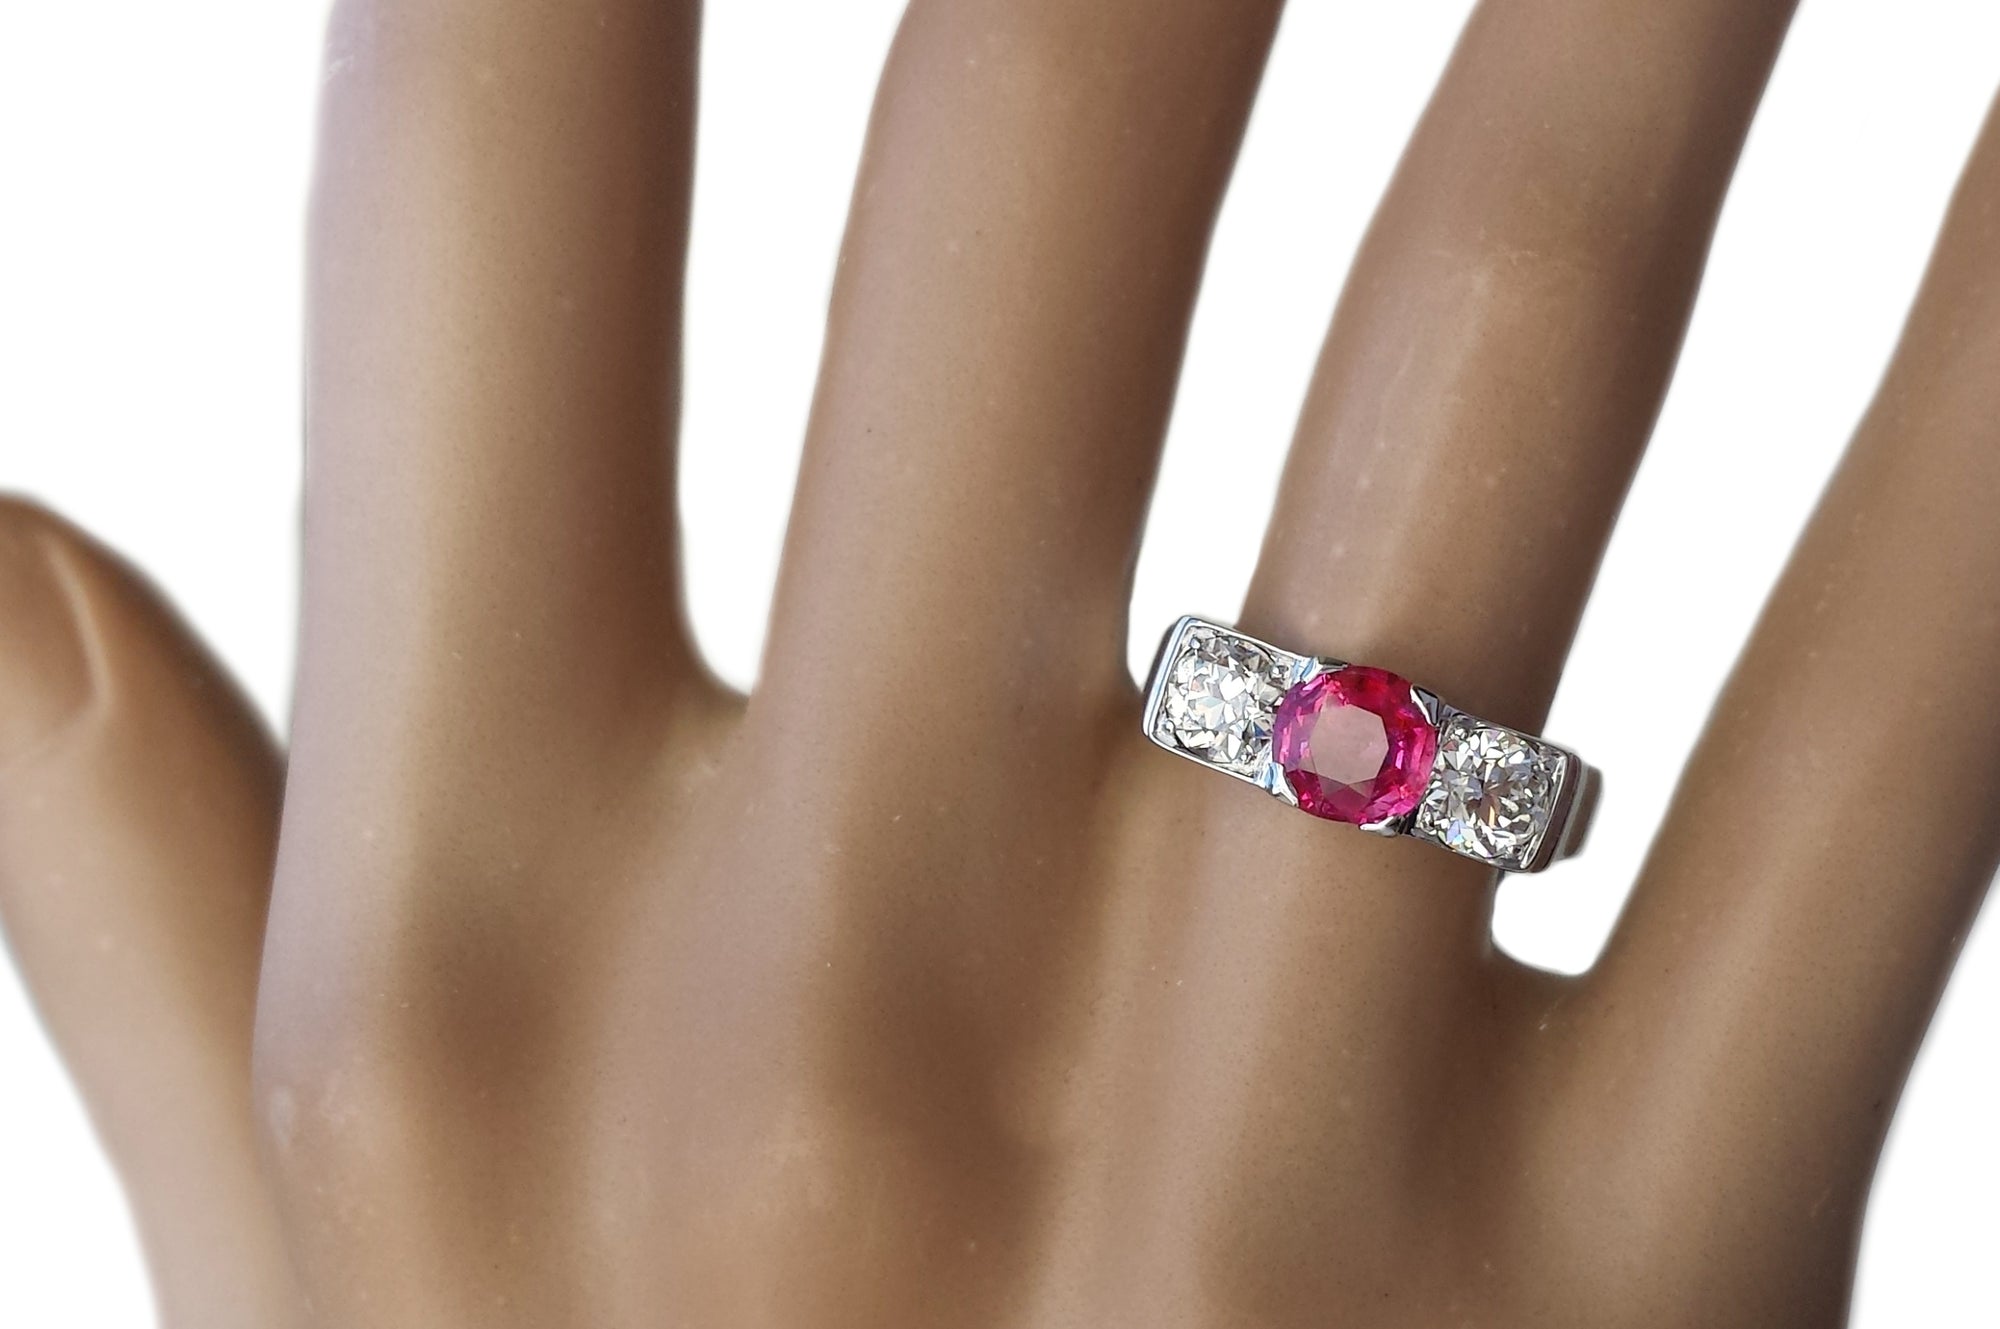 Vintage 1.62tcw Burmese Ruby & Old European Cut Diamond Engagement Ring on model finger